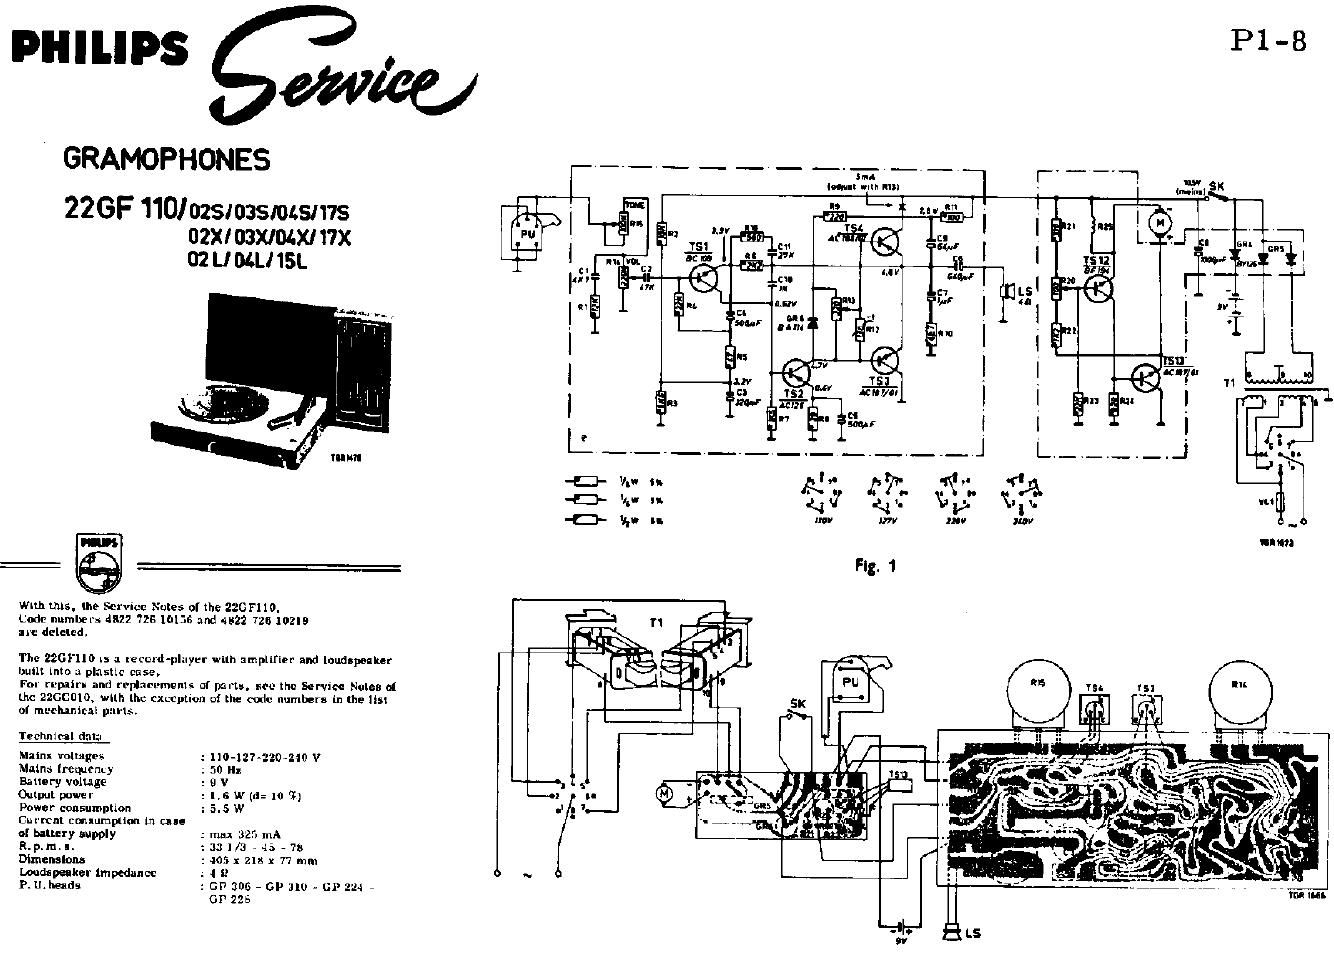 philips 22 gf 110 service manual